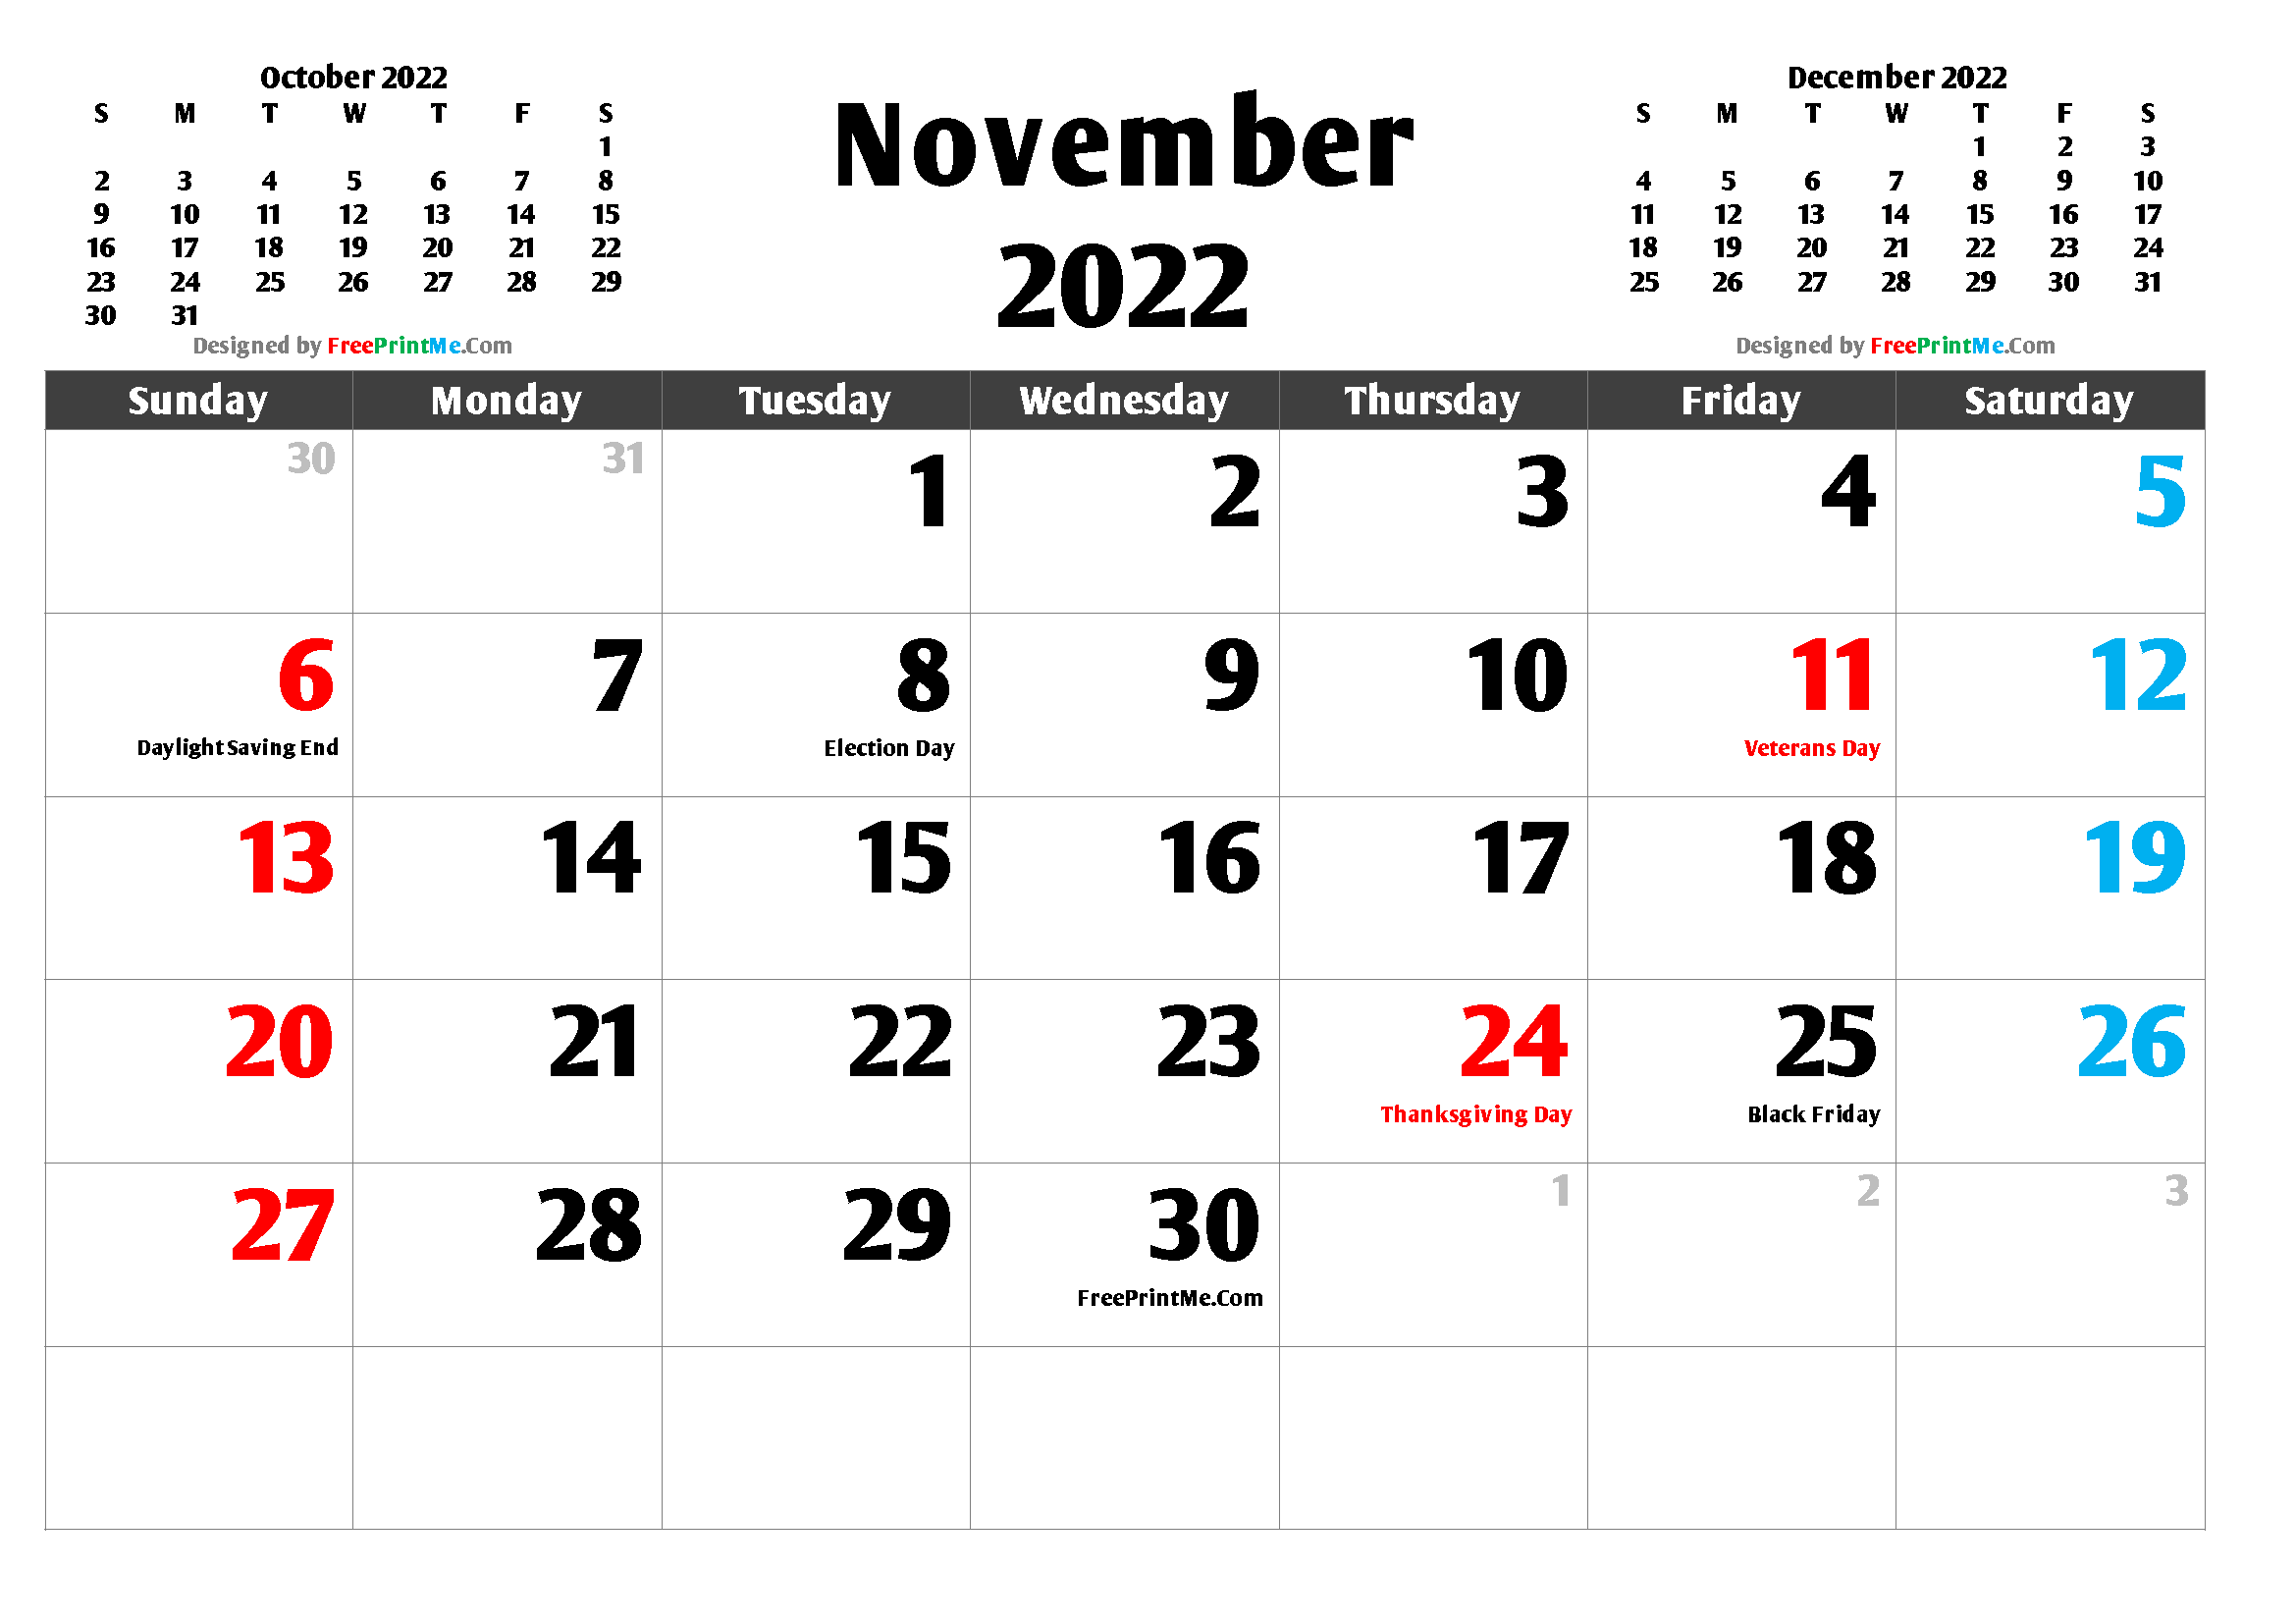 November 2022 Calendar Page Free Printable November 2022 Calendar Pdf, Png Image